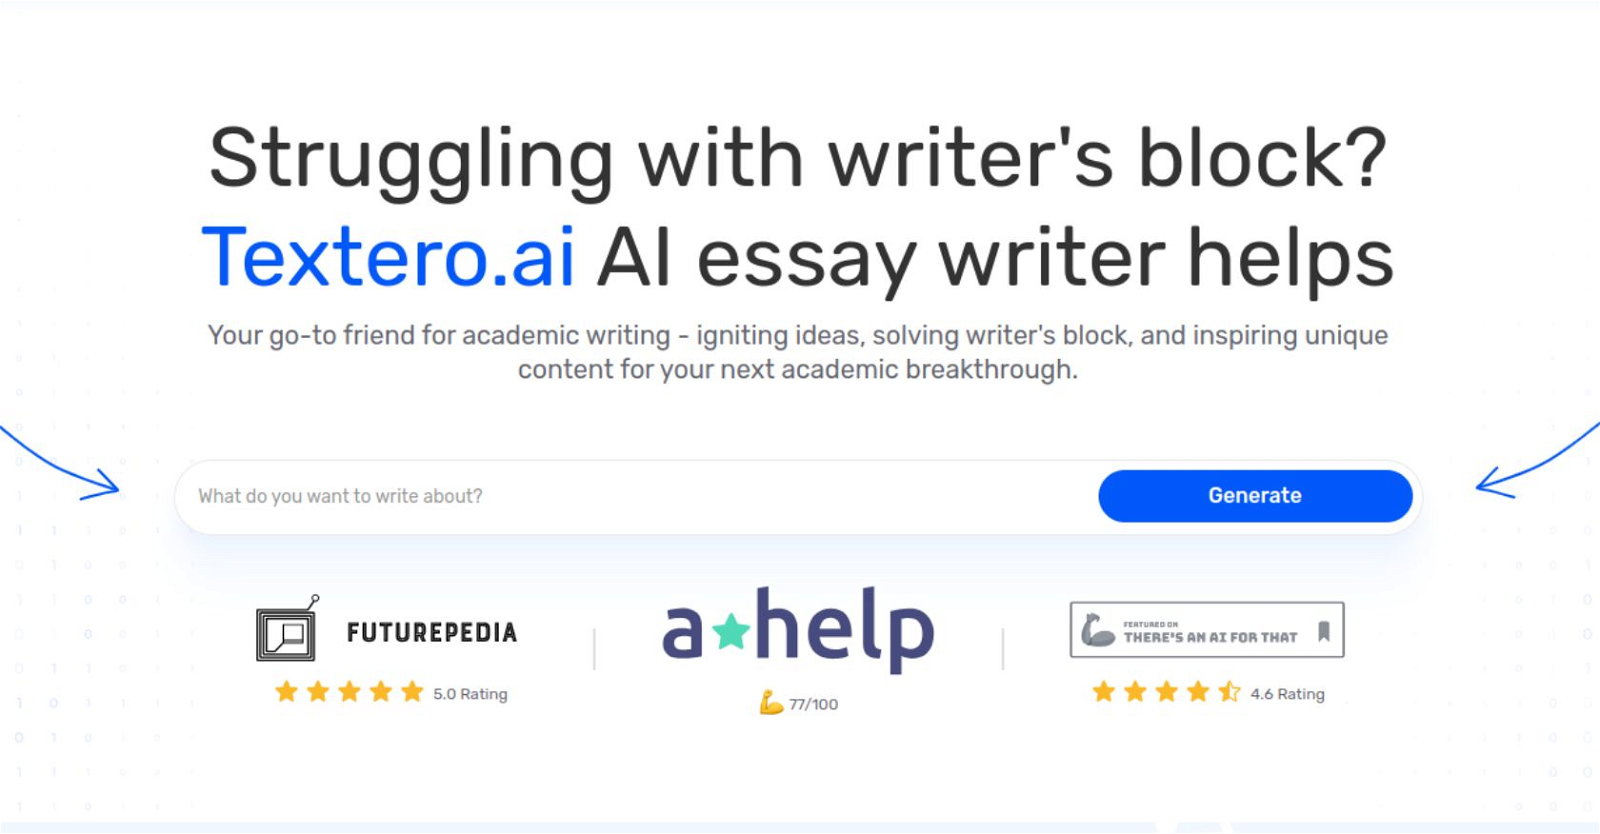 Textero.ai AI Essay Writer website